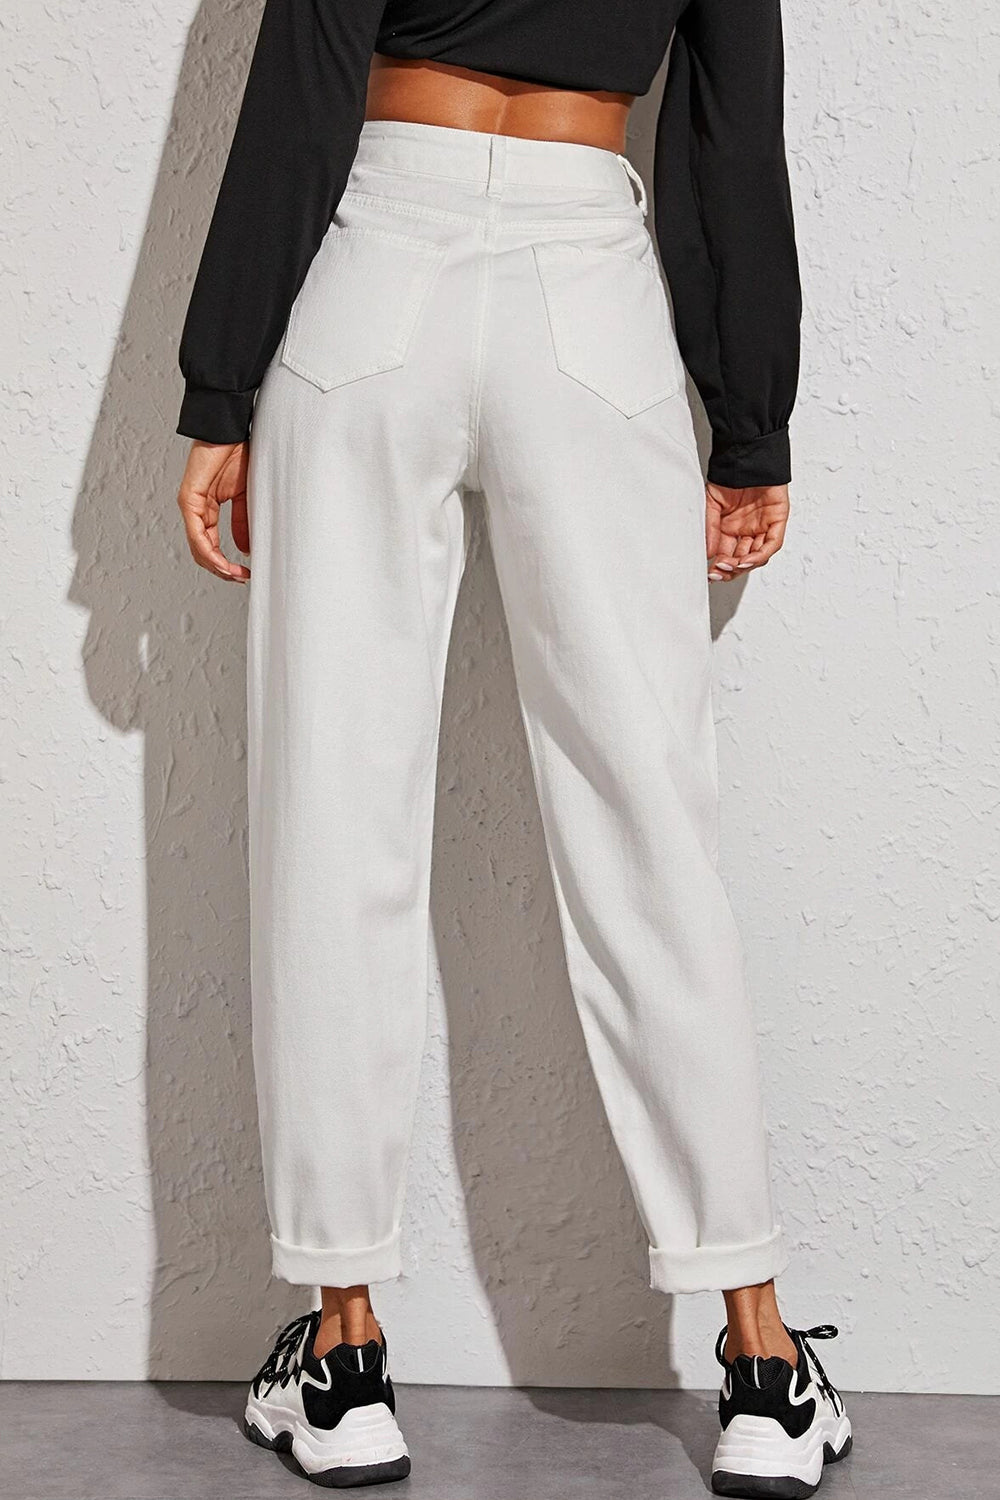 White Sleeveless Top & Wide-Leg Pants 2-Piece Set | White two piece outfit,  White wide leg pants, Sleeveless top